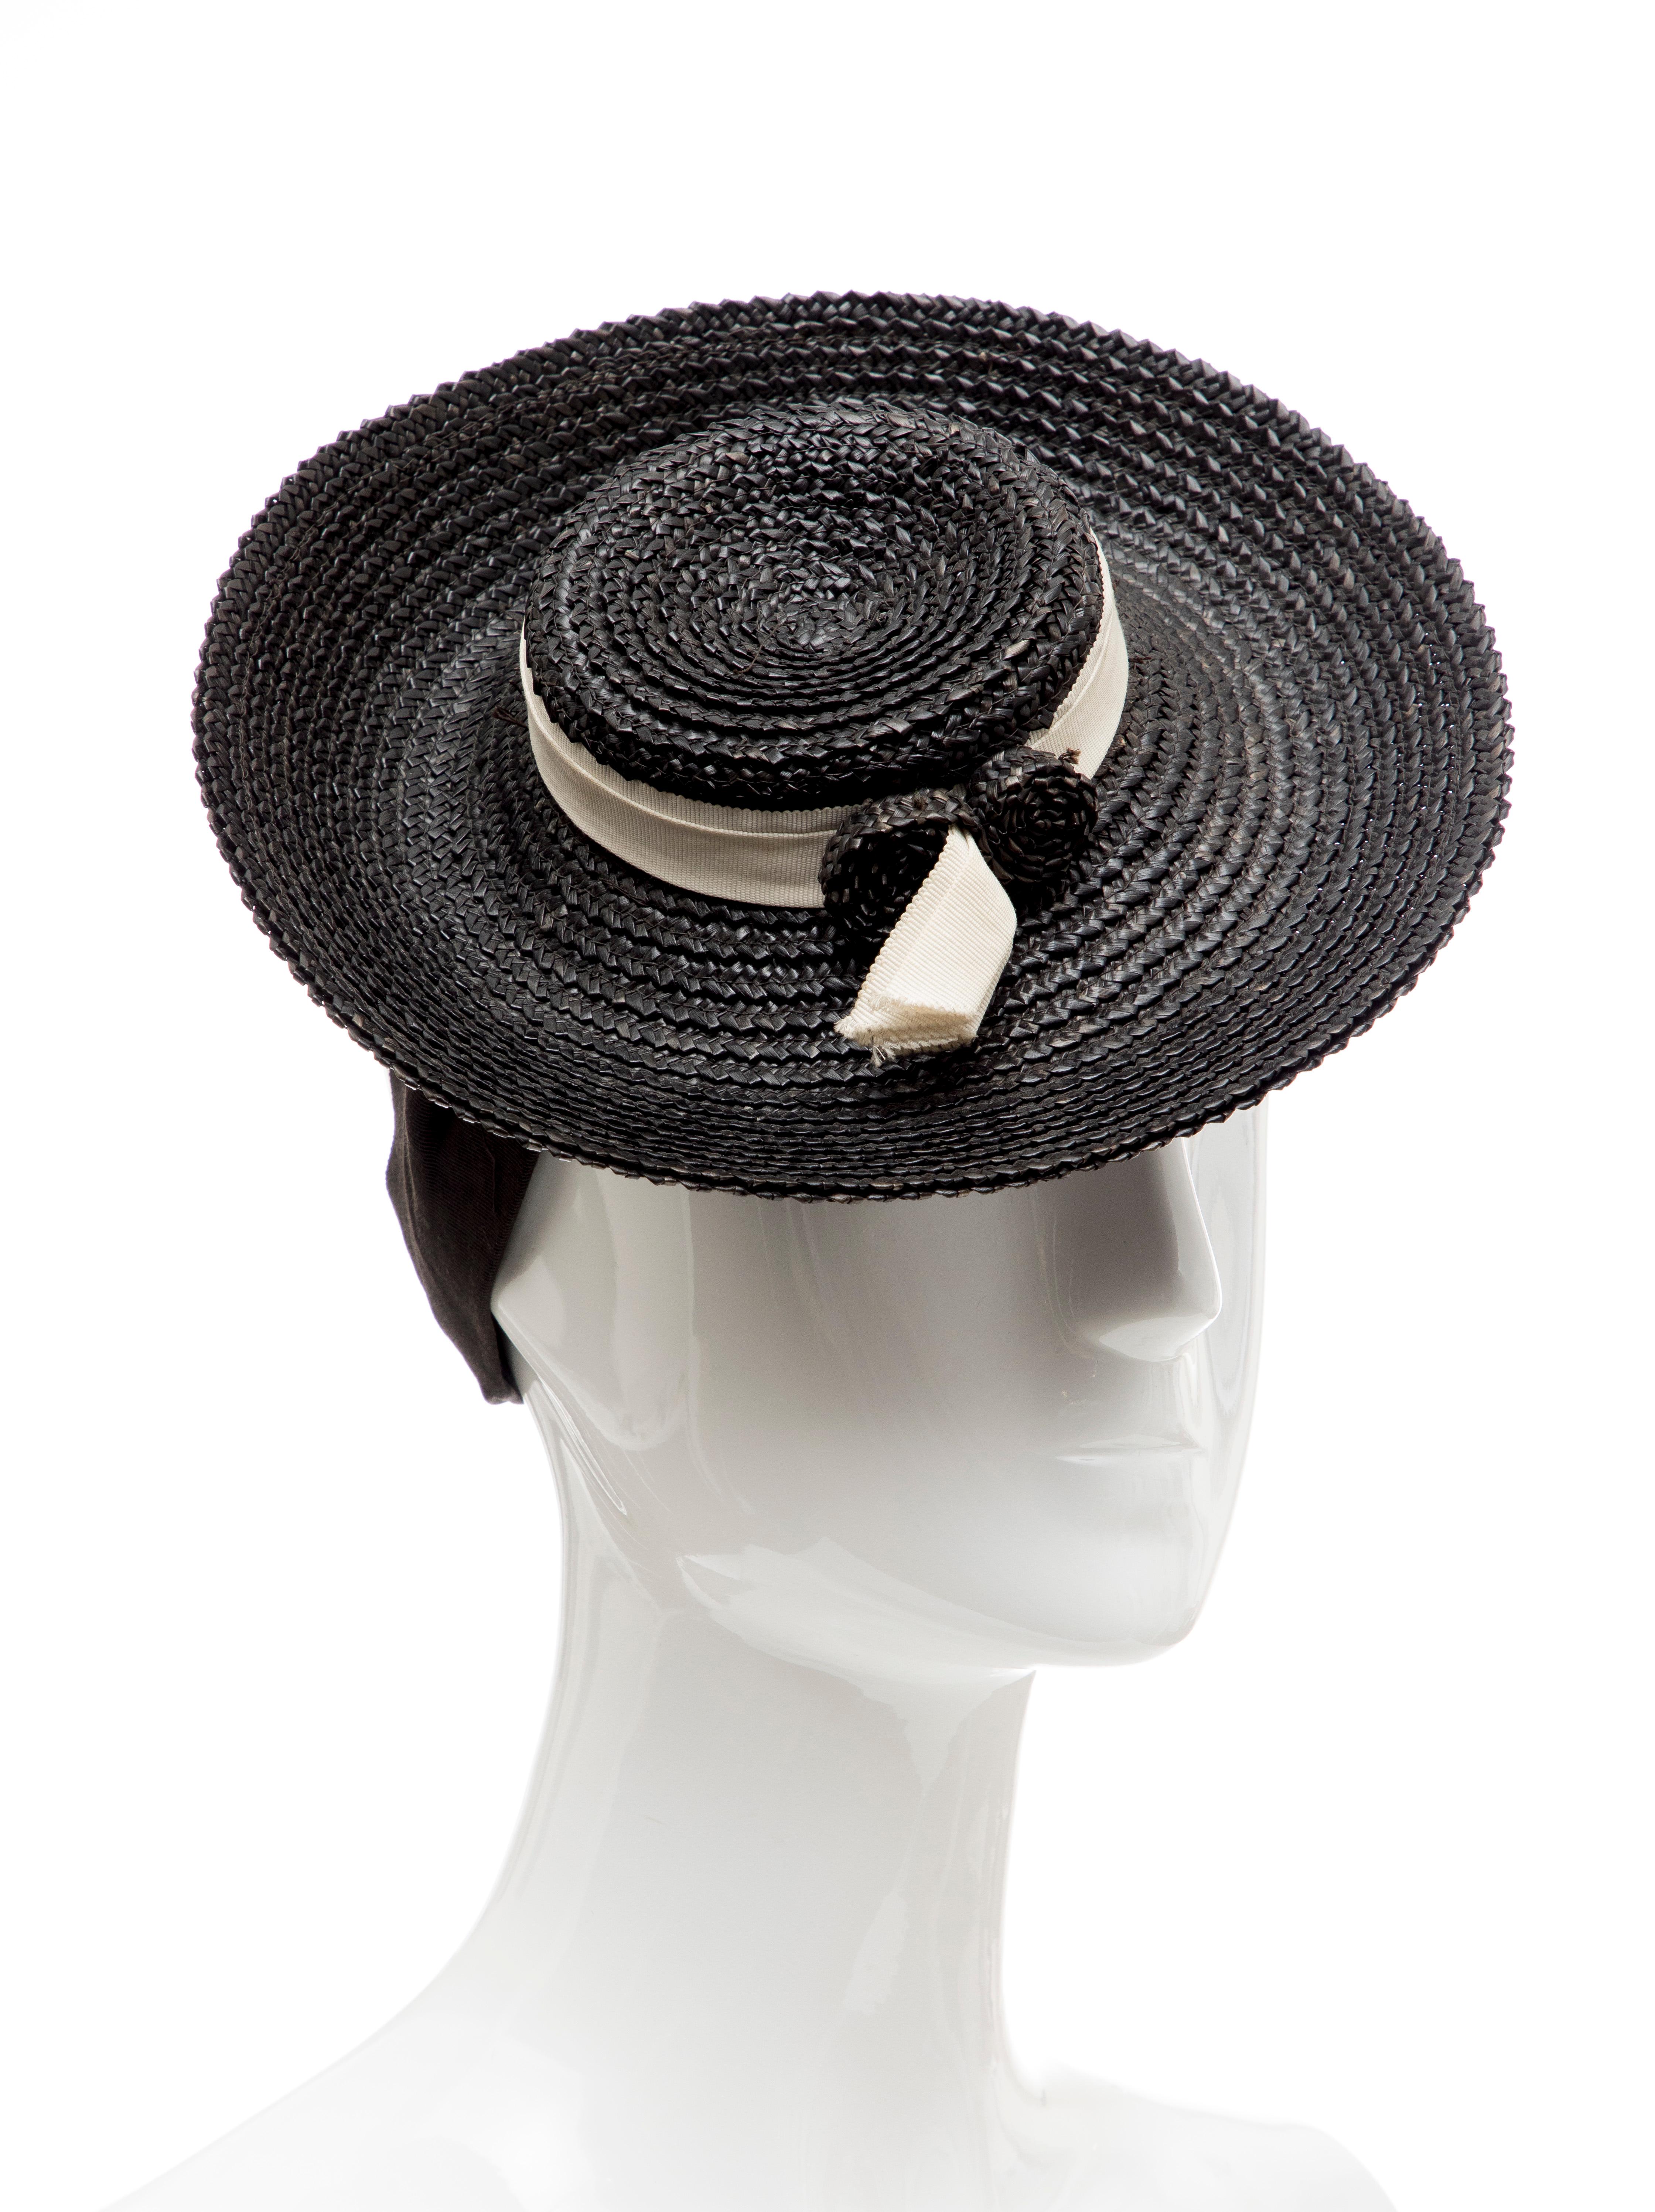 Black raffia tilt hat with cream grosgrain band. Circa: 1930's

Circumference: 11.5